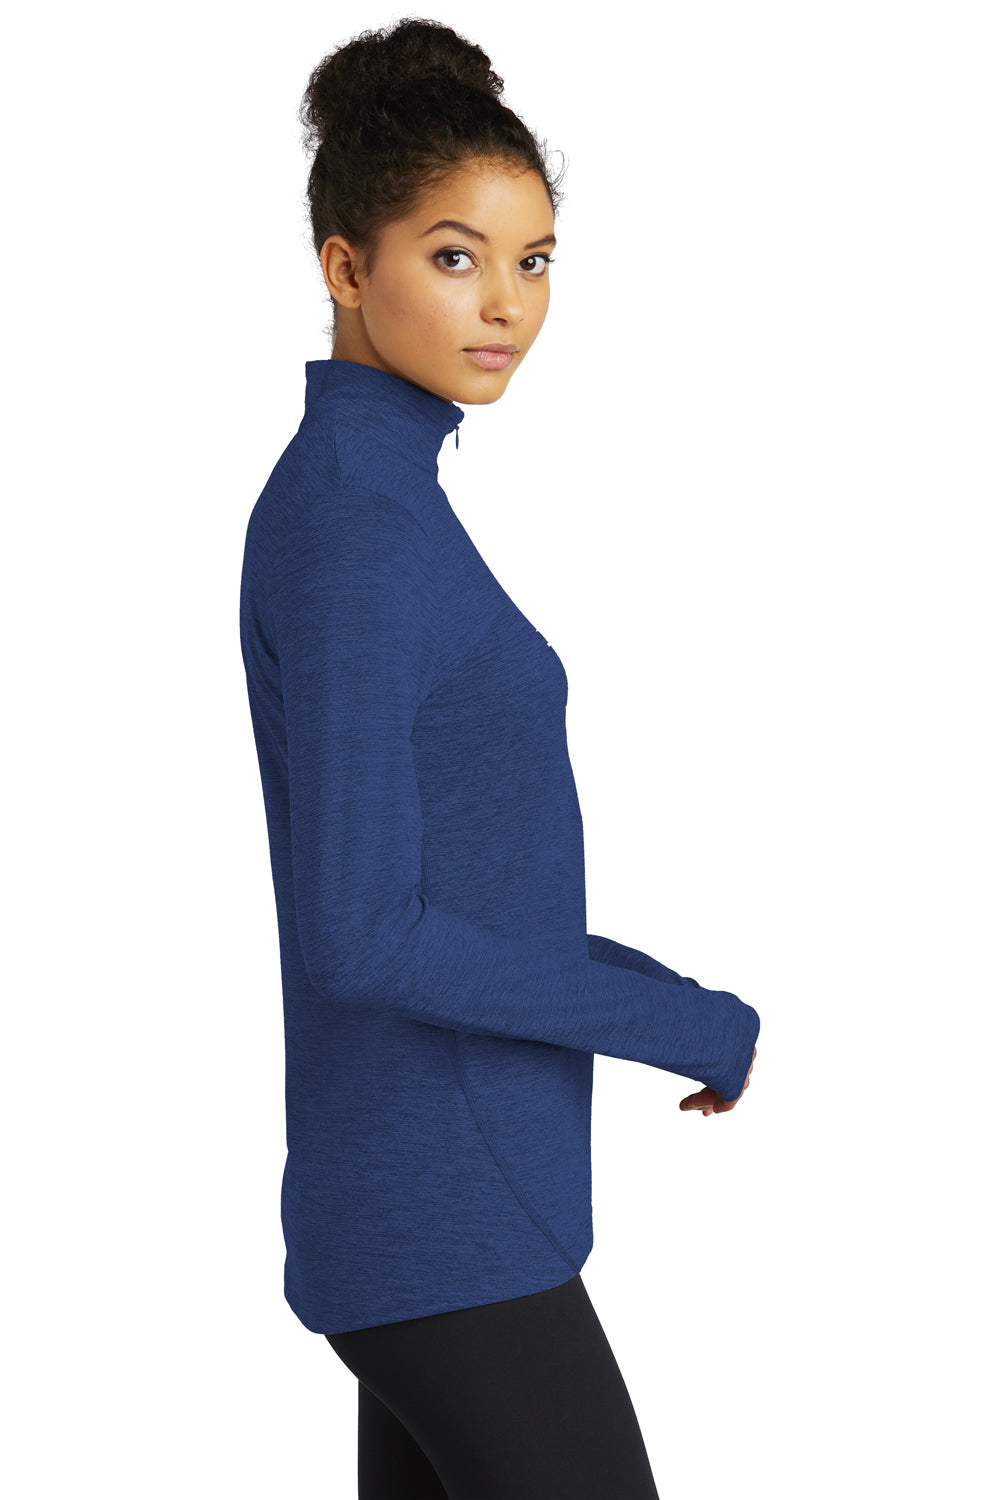 Sport-Tek Womens Exchange 1.5 Long Sleeve 1/4 Zip T-Shirt Heather True Royal Blue Side